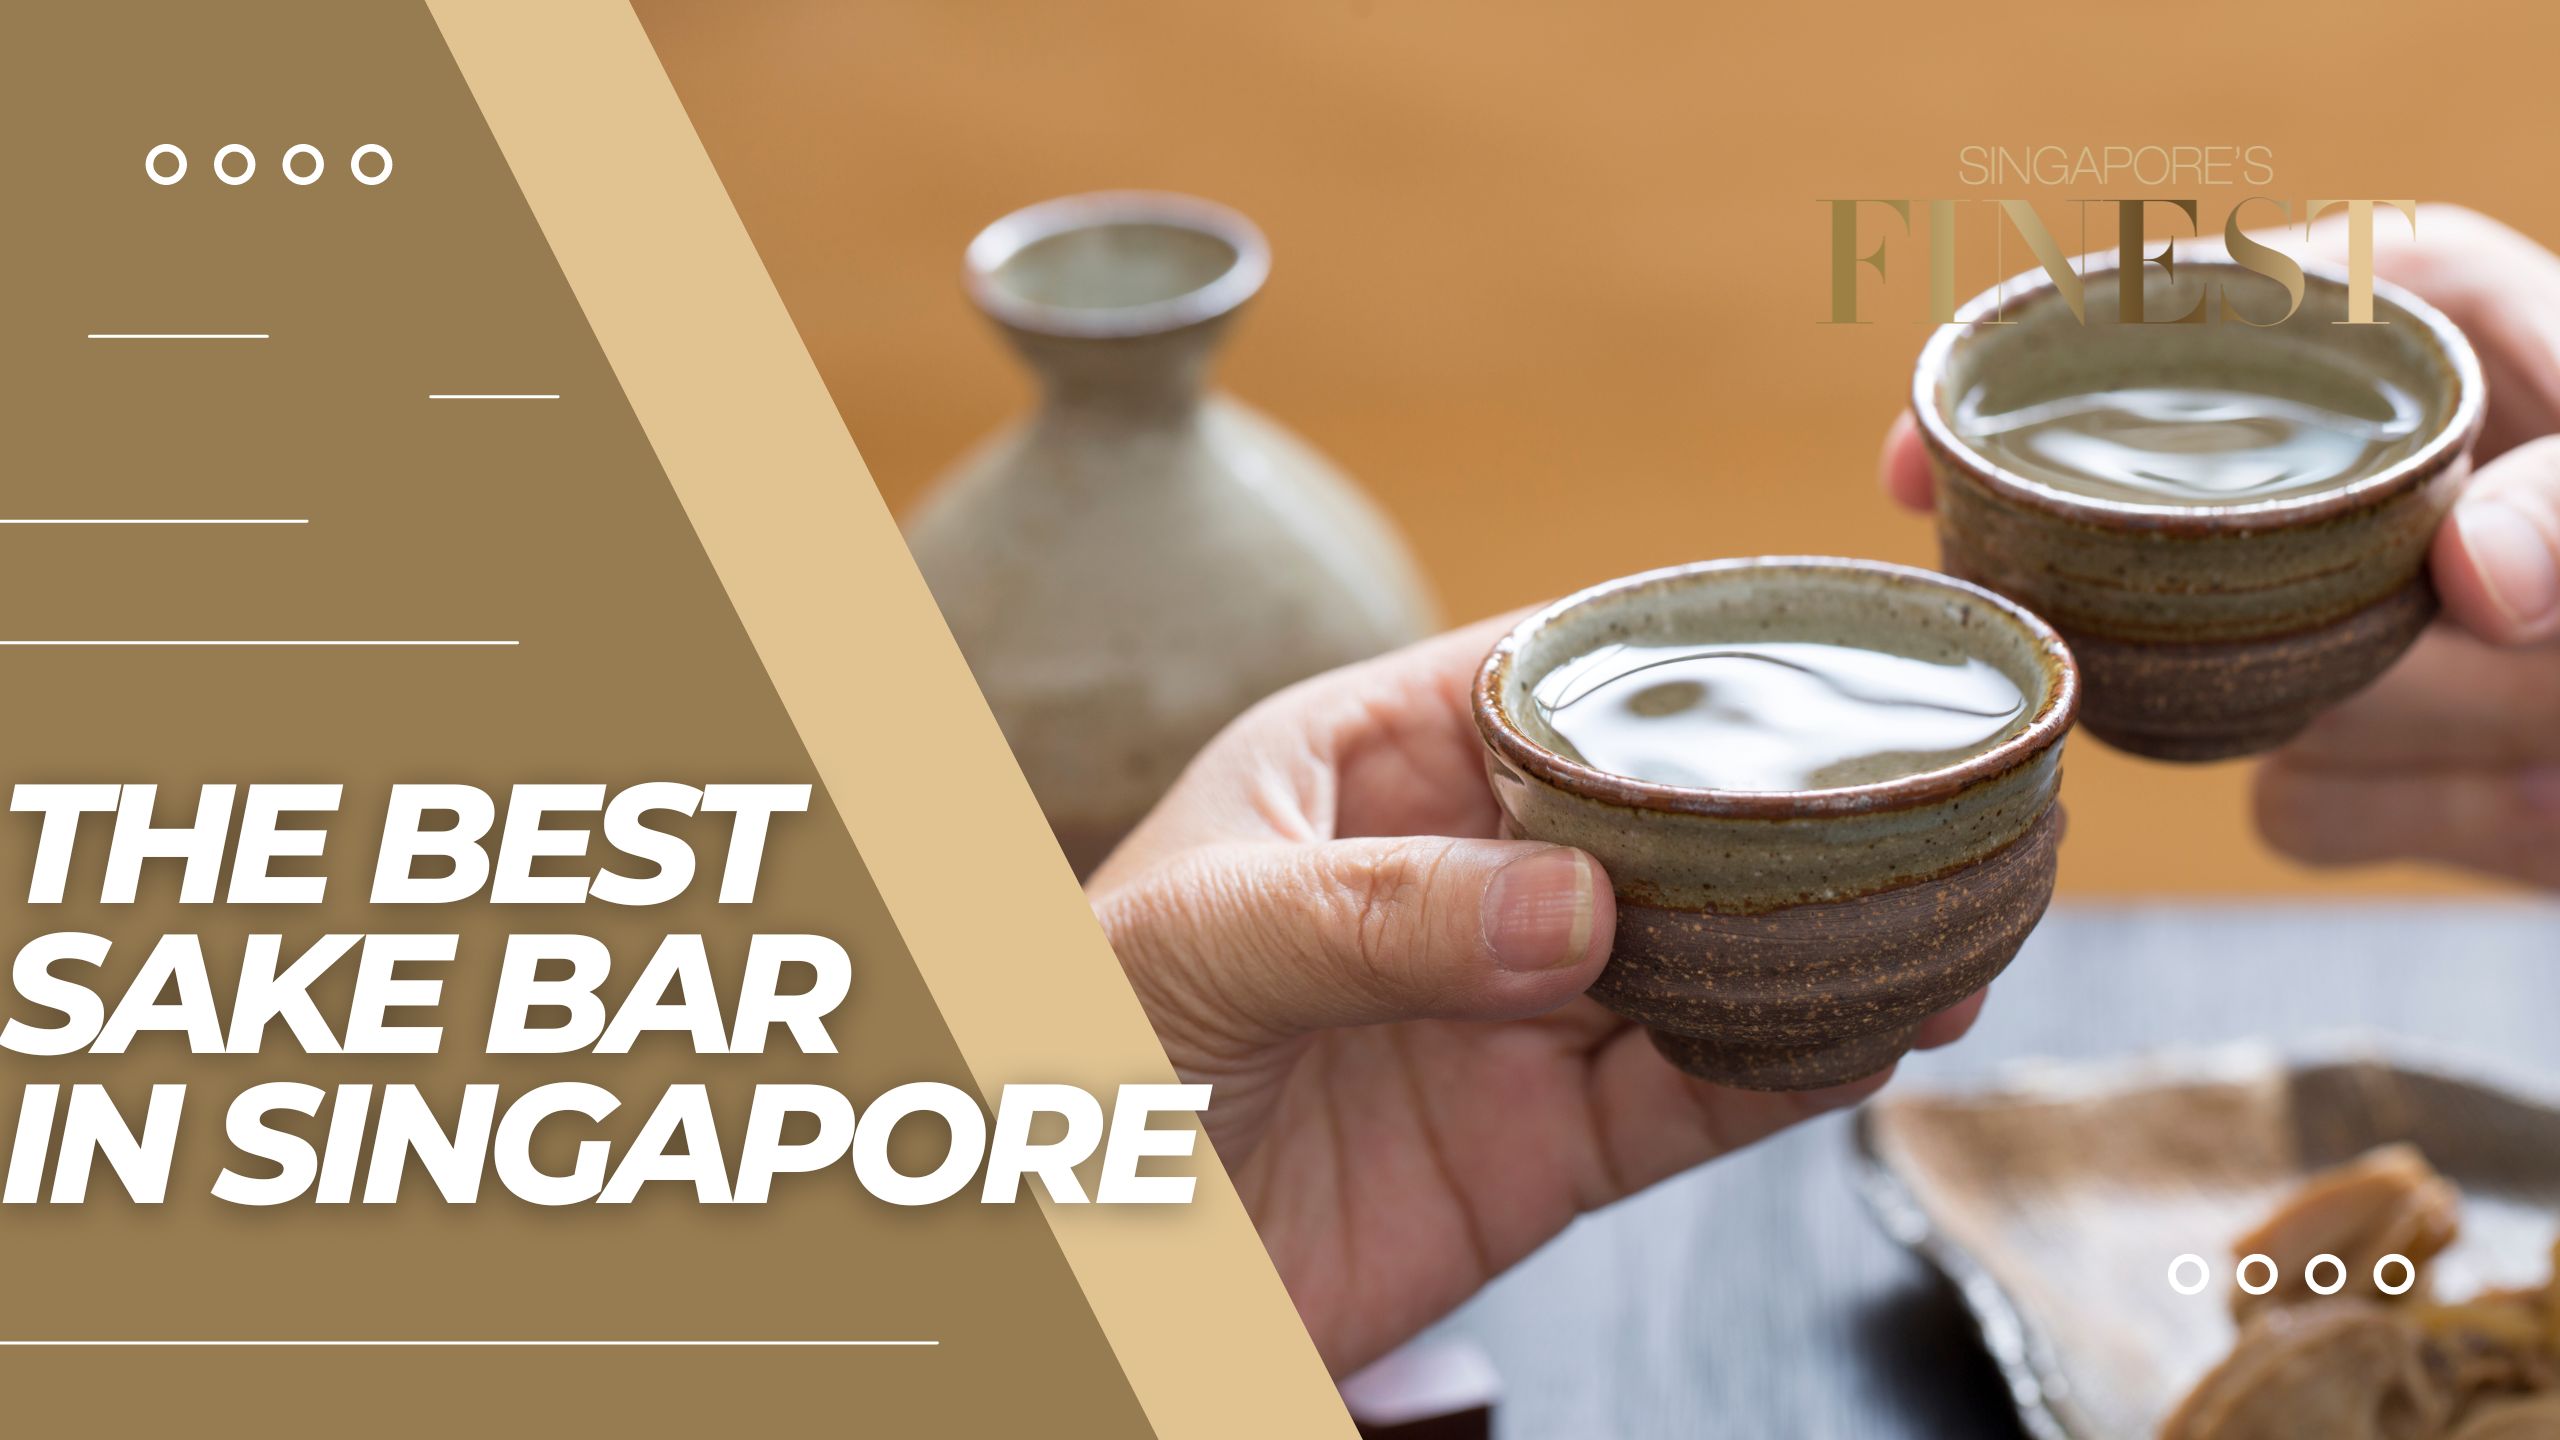 The Finest Sake Bar in Singapore